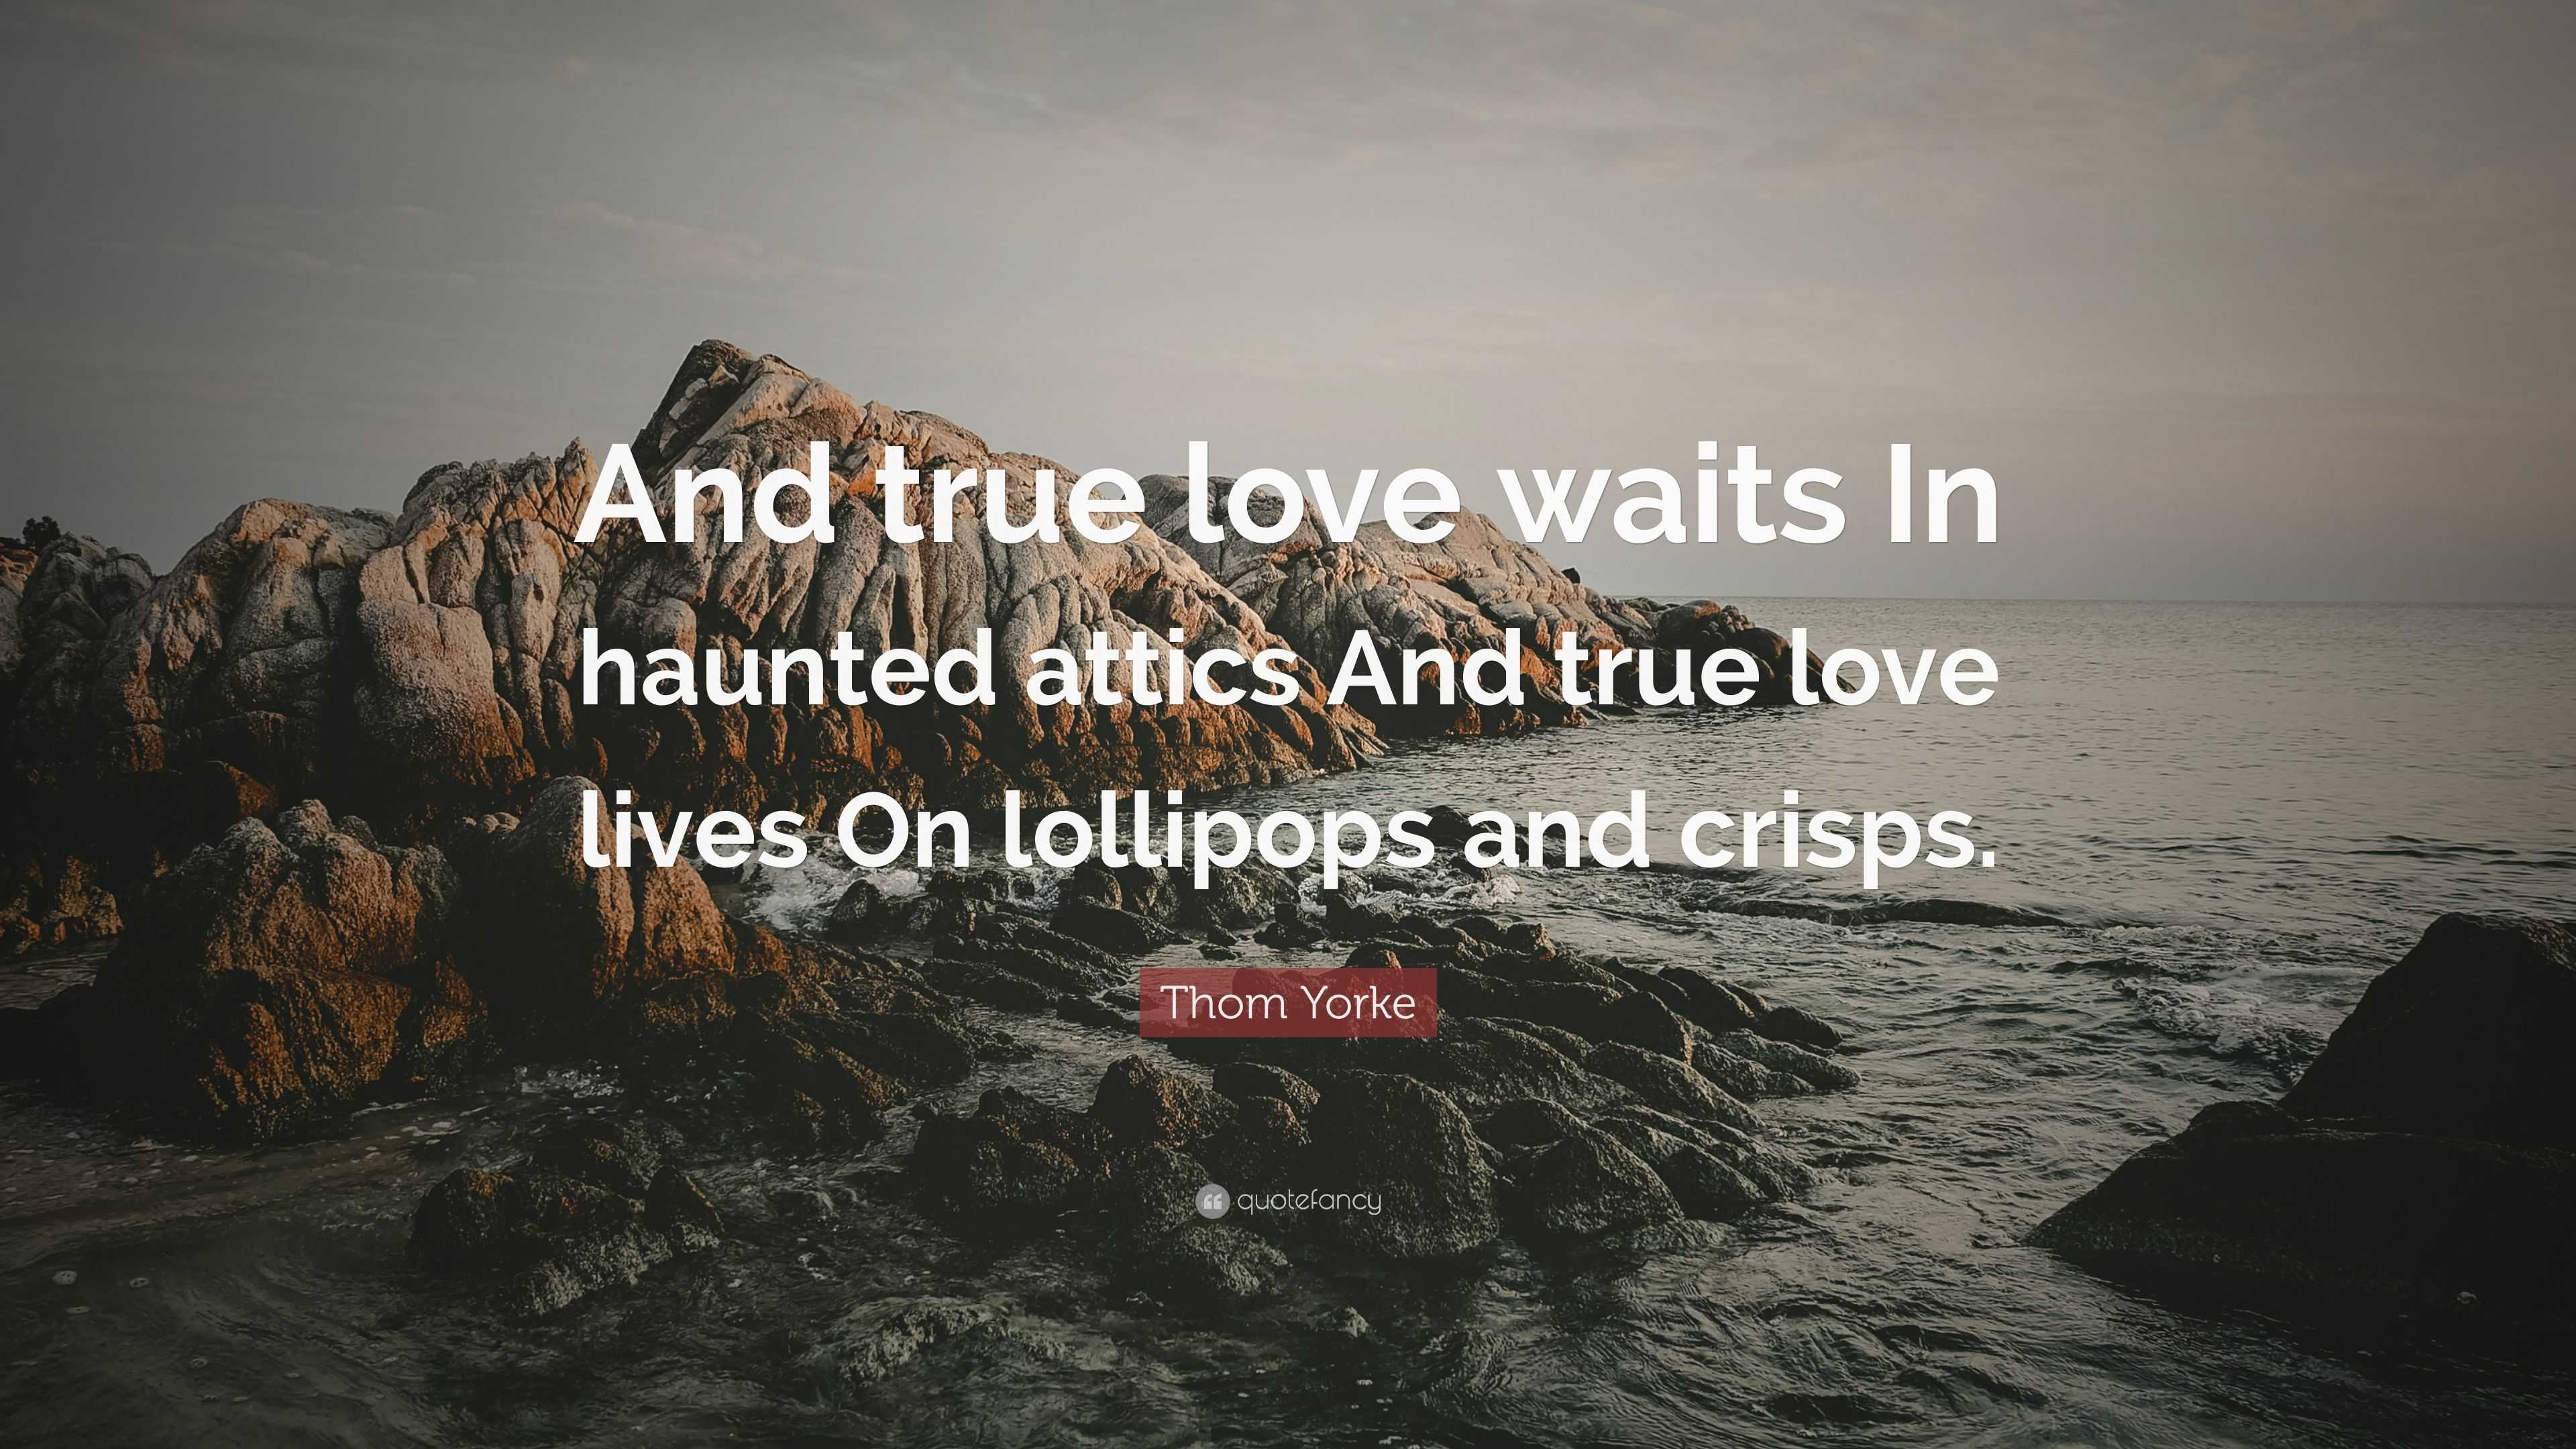 True Love Waits - song and lyrics by Eskina